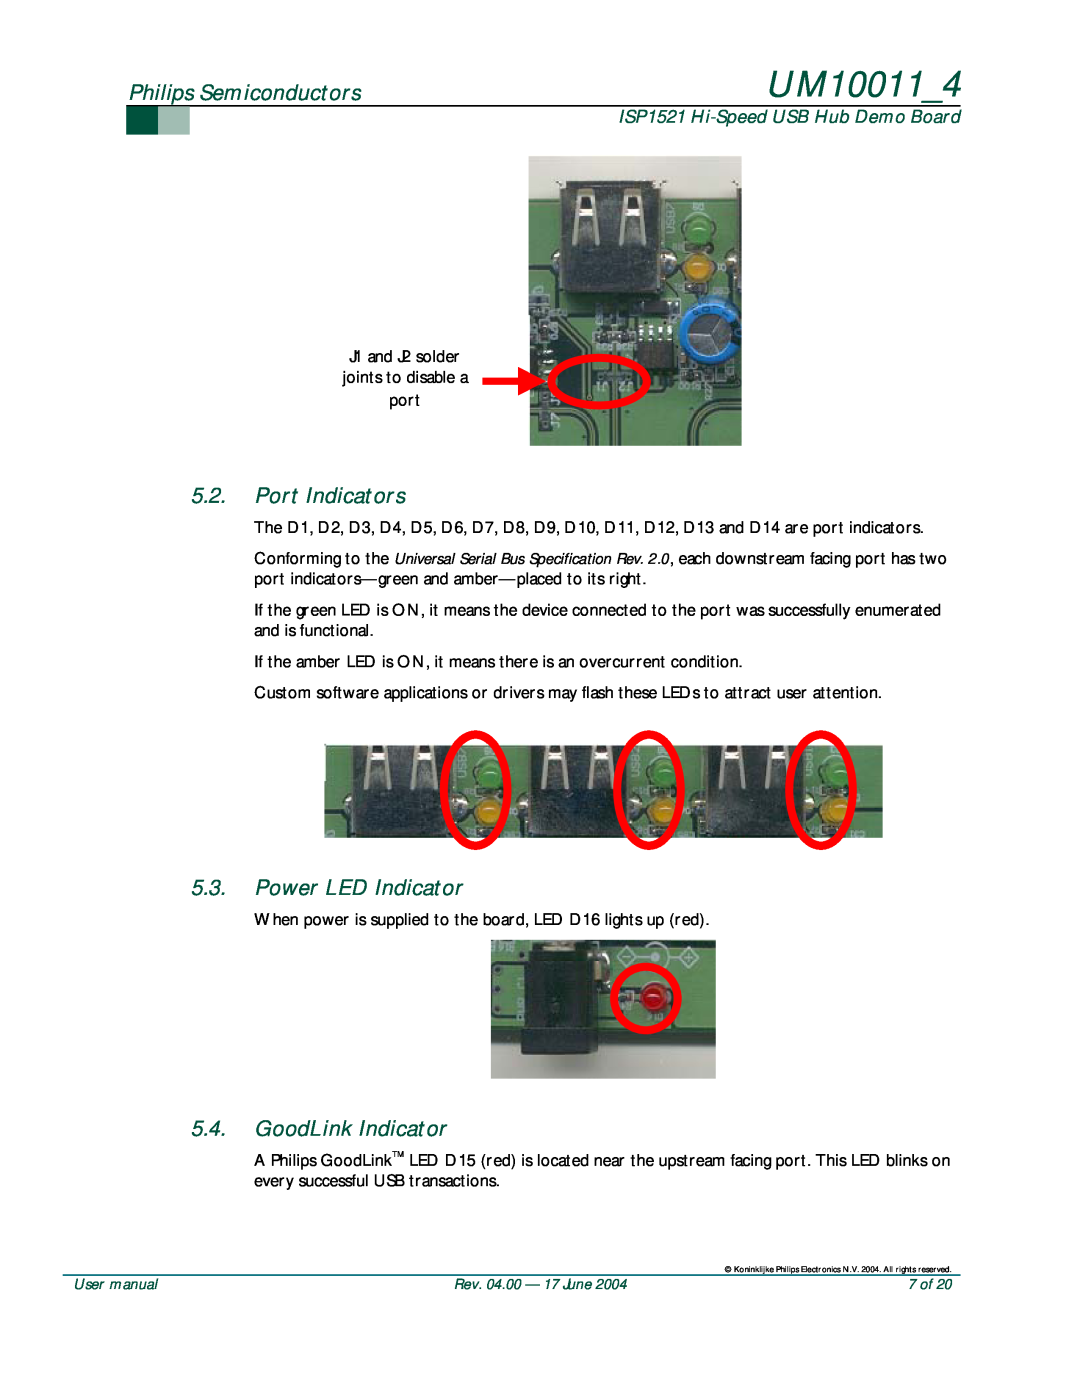 Philips UM10011 user manual Port Indicators, Power LED Indicator, GoodLink Indicator, Philips Semiconductors 